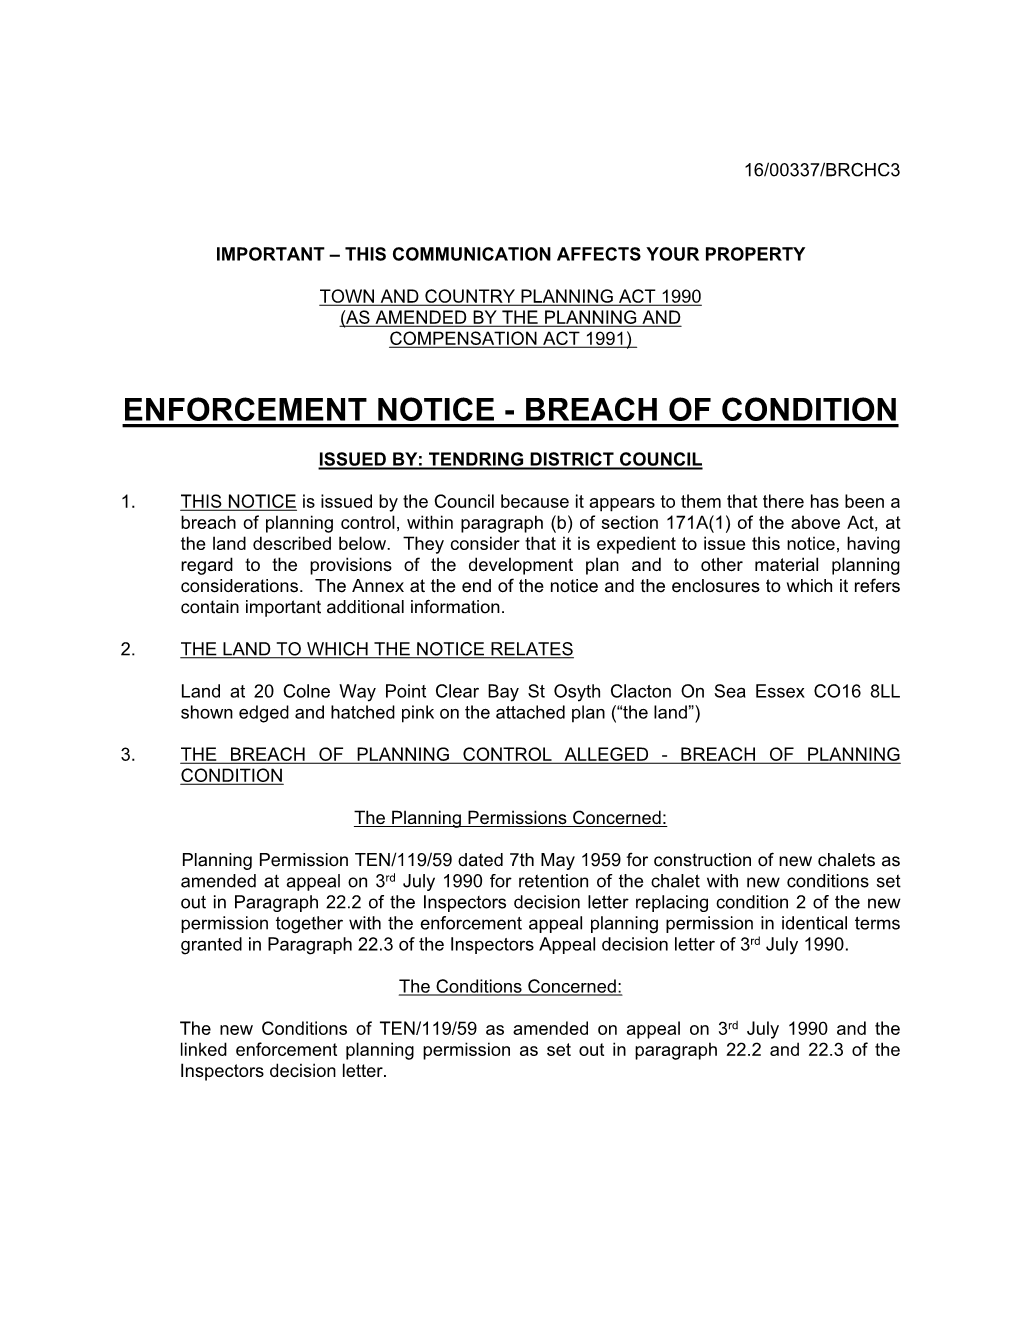 Enforcement Notice - Breach of Condition